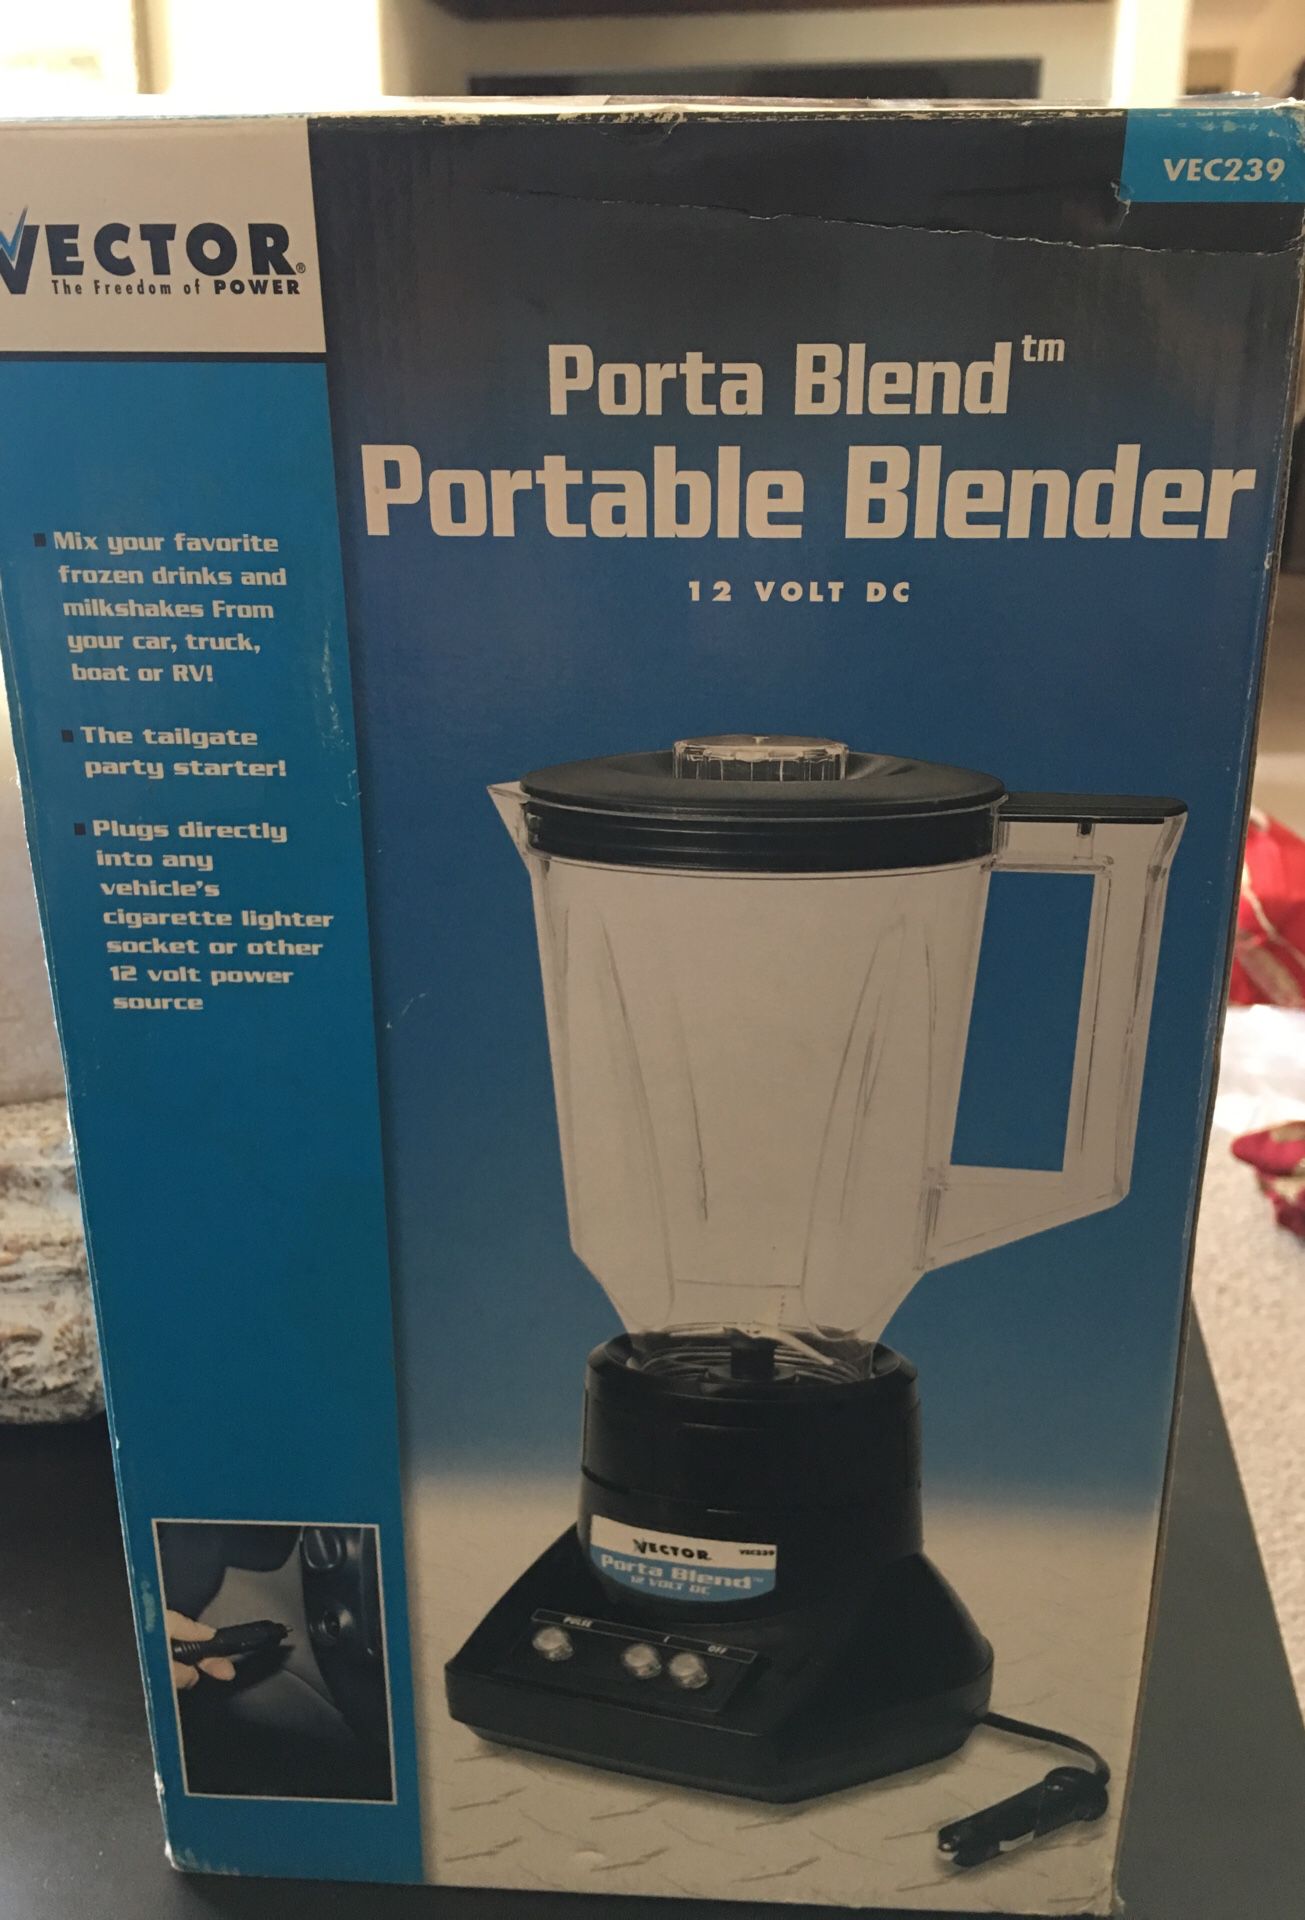 Porta blend / portable blender